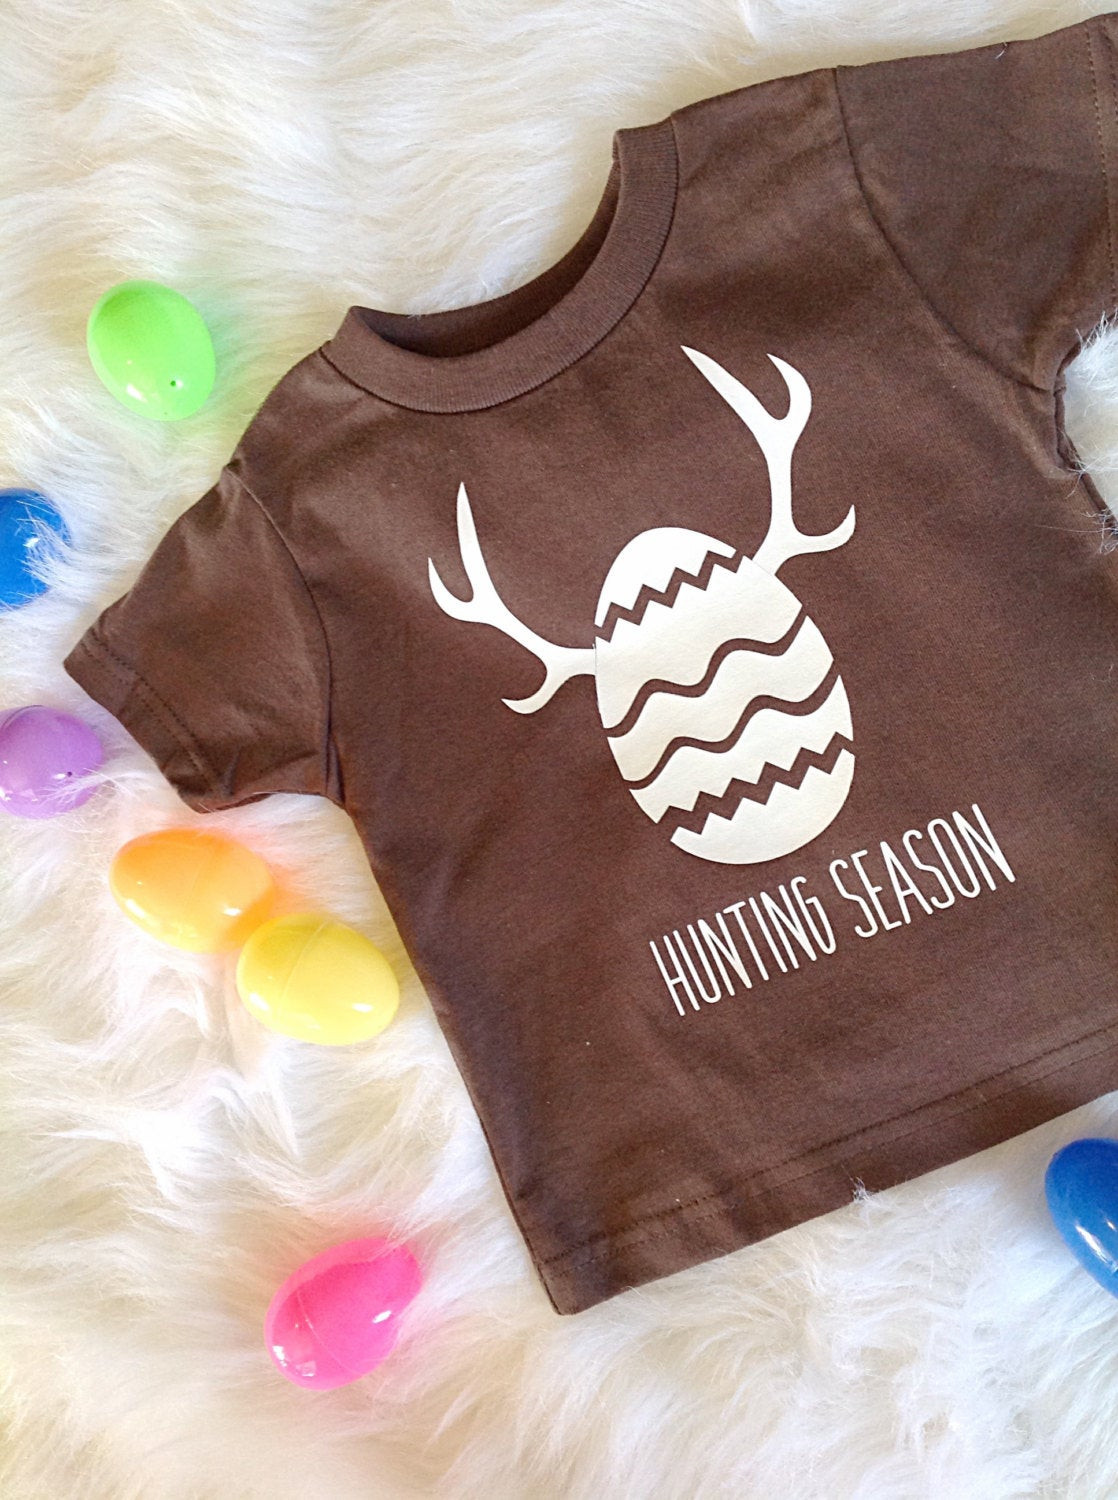 Easter Shirt Ideas
 Toddler Easter shirt Egg hunt outfit Hunting Season shirt